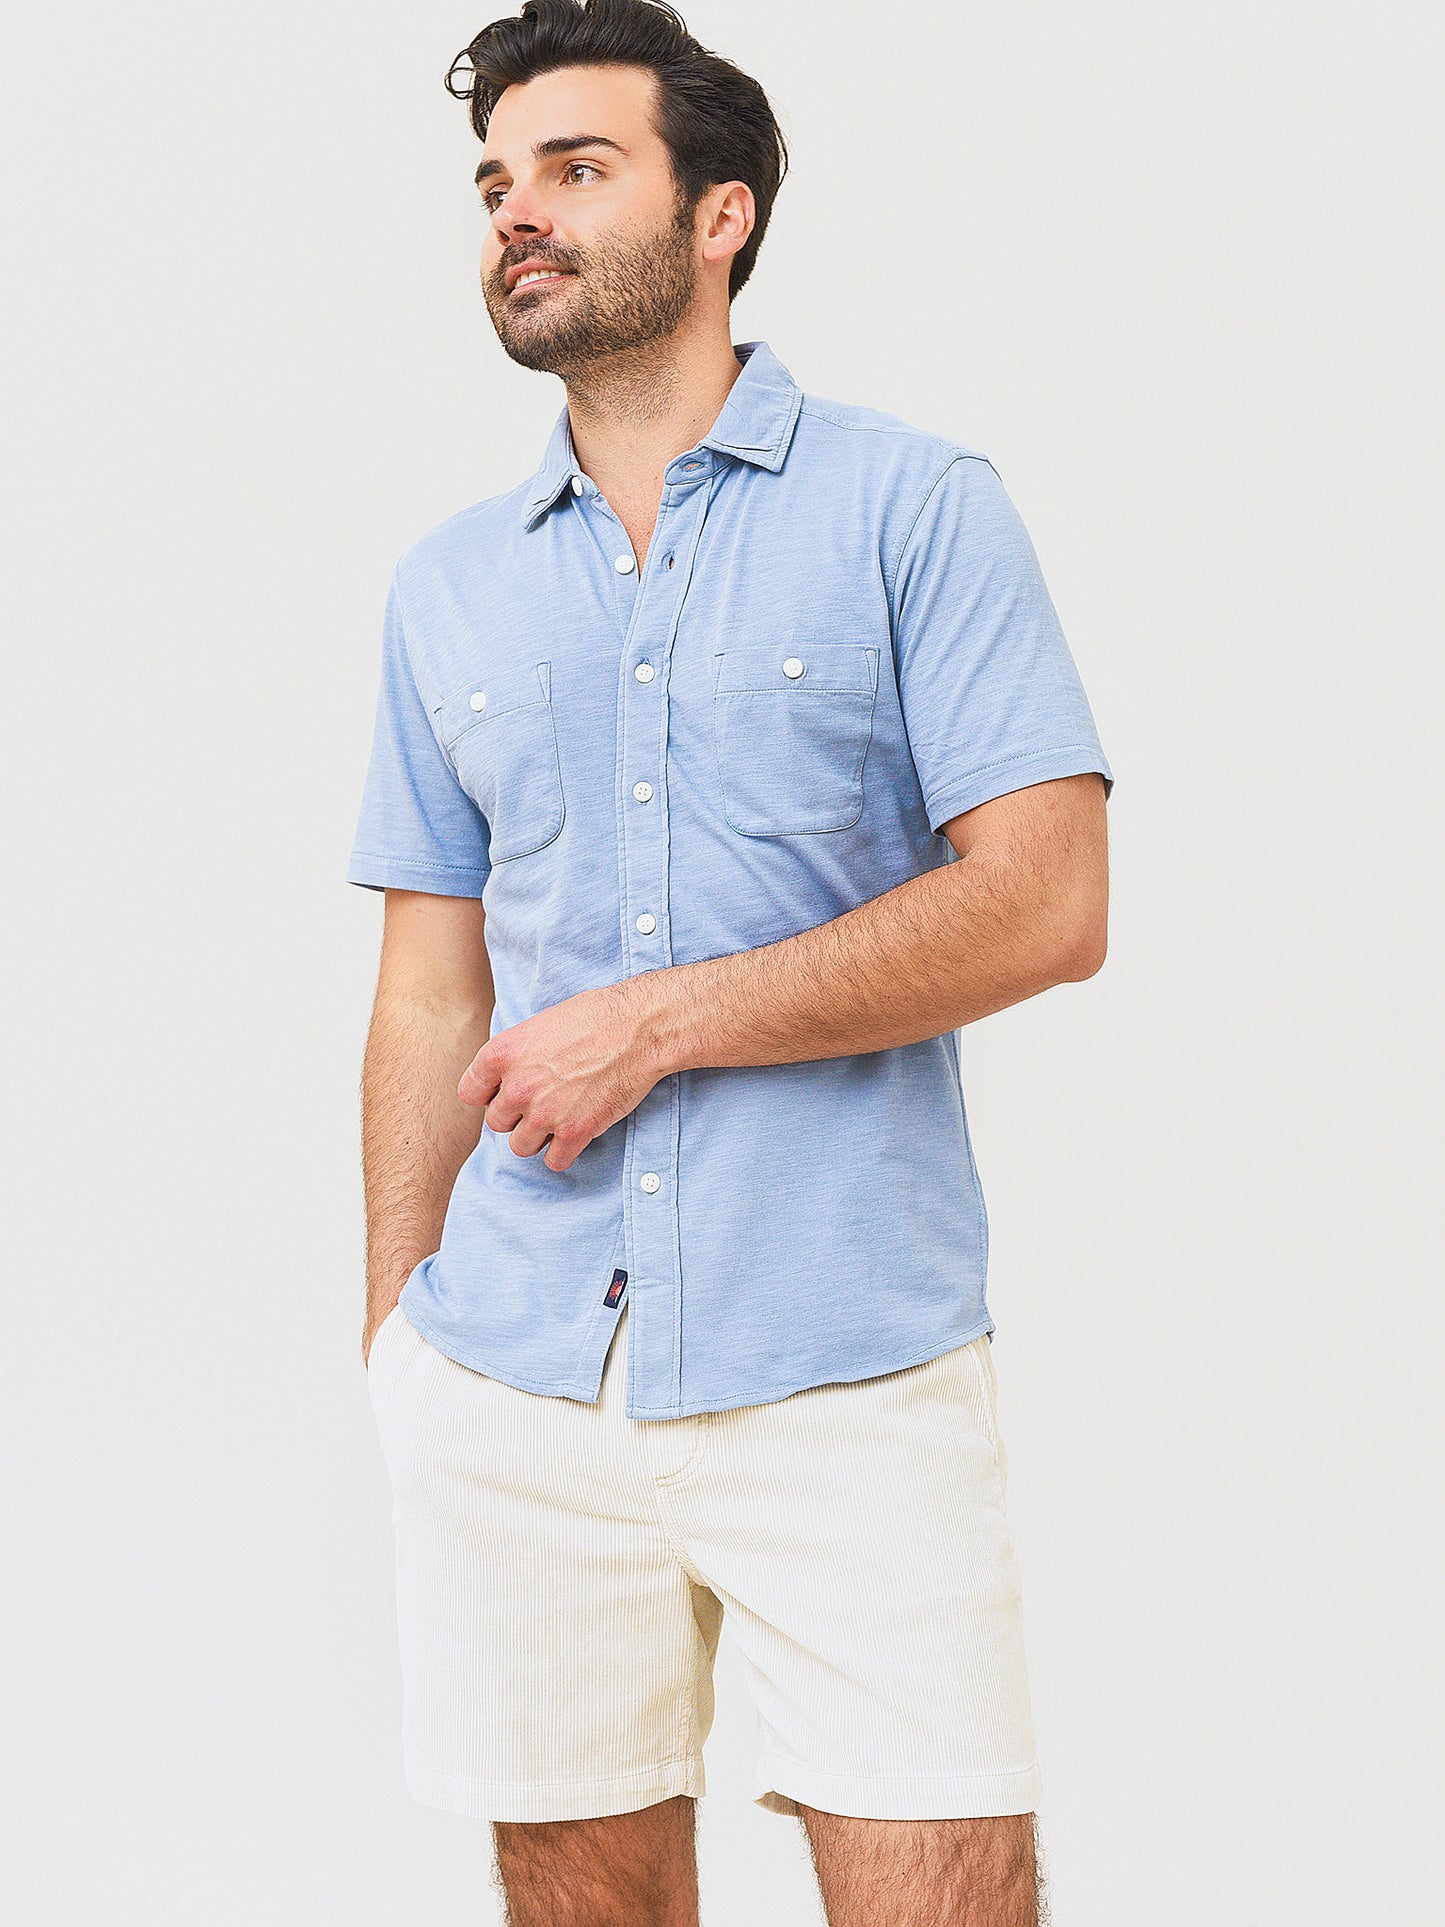 Faherty Brand Men's Short Sleeve Knit Seasons Shirt